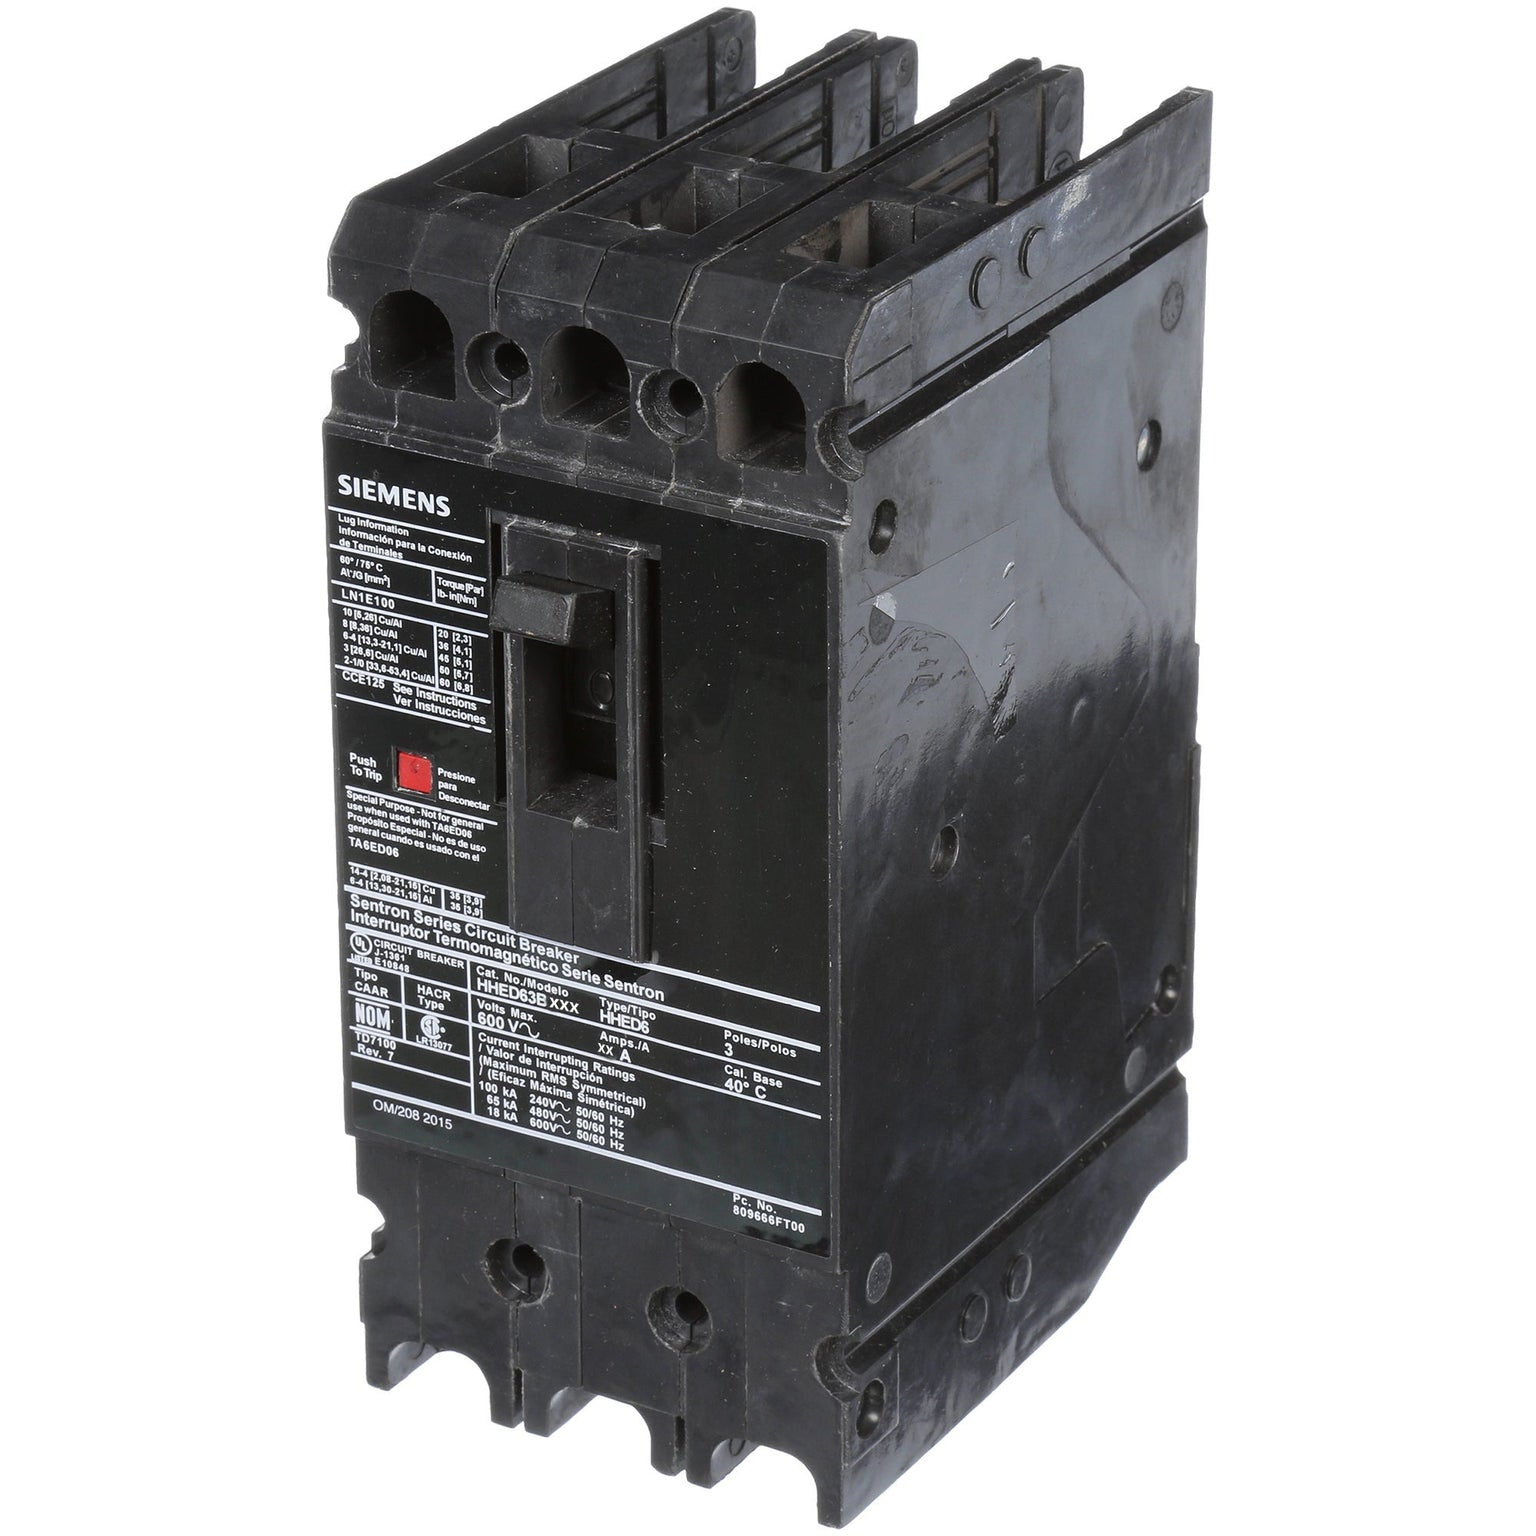 HHED63B045L - Siemens - 45 Amp Molded Case Circuit Breaker